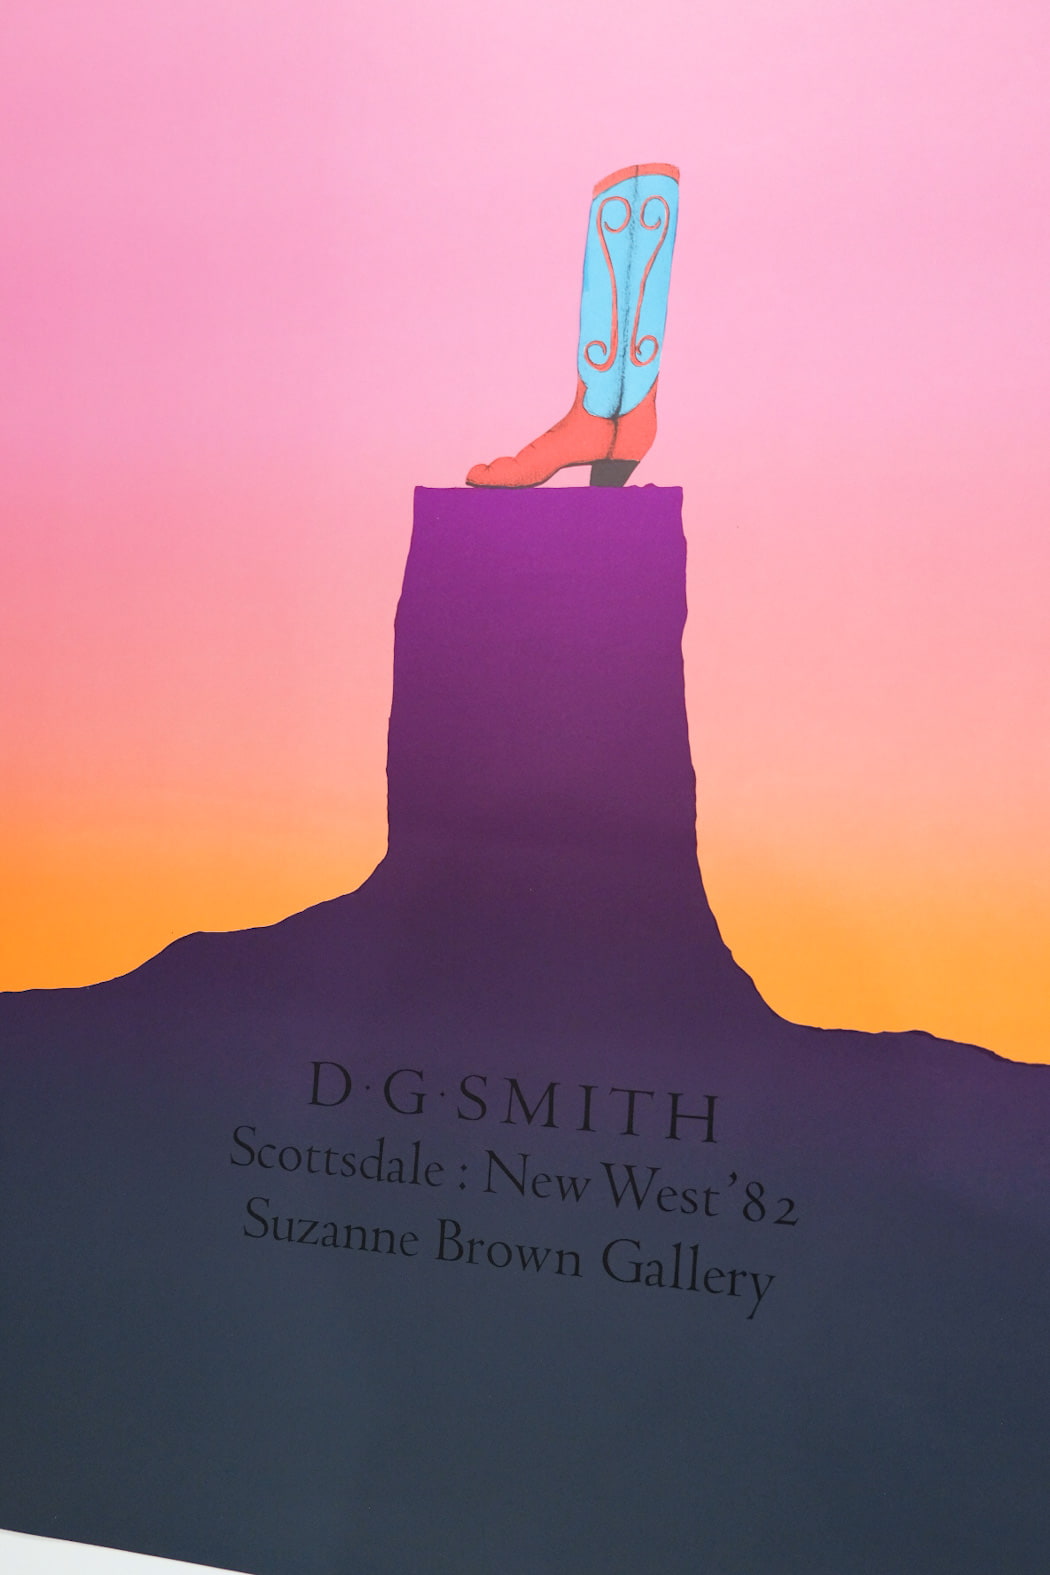 D.G Smith Scottsdale New West ‘82